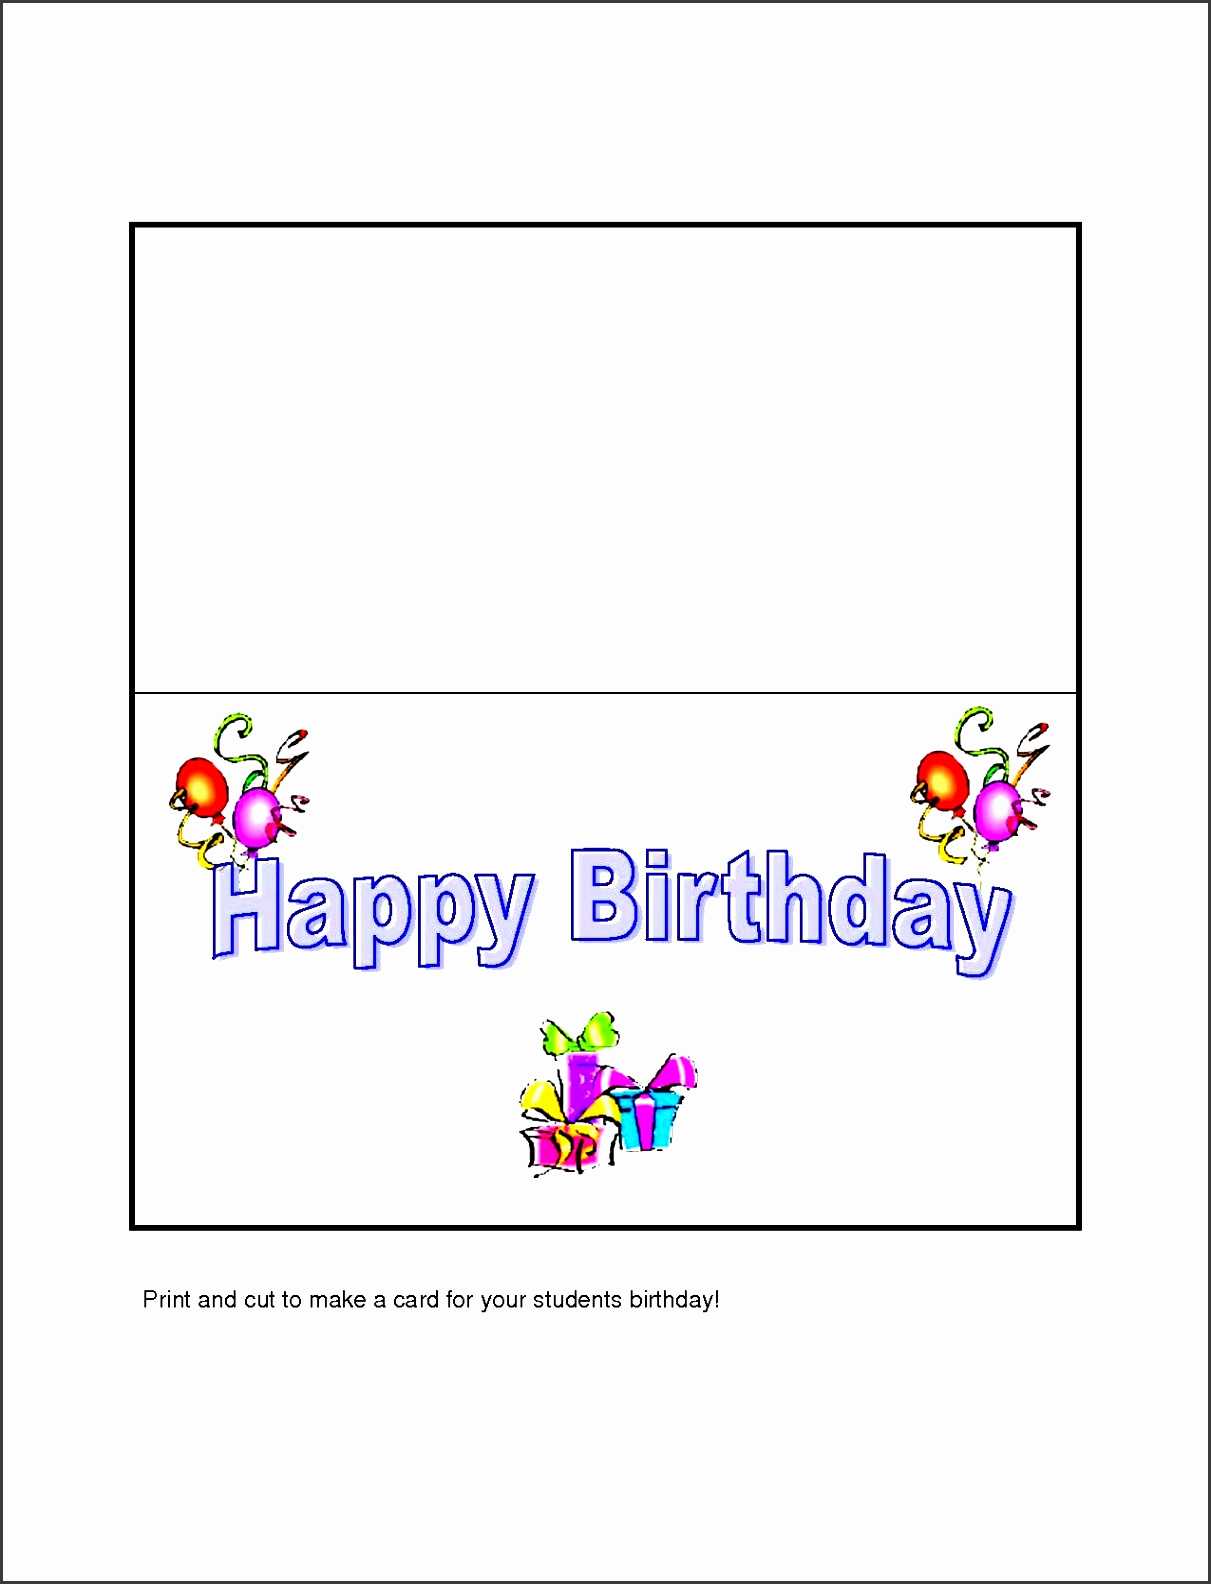 Beautiful 10 Free Microsoft Word Greeting Card Templates Throughout Birthday Card Template Microsoft Word